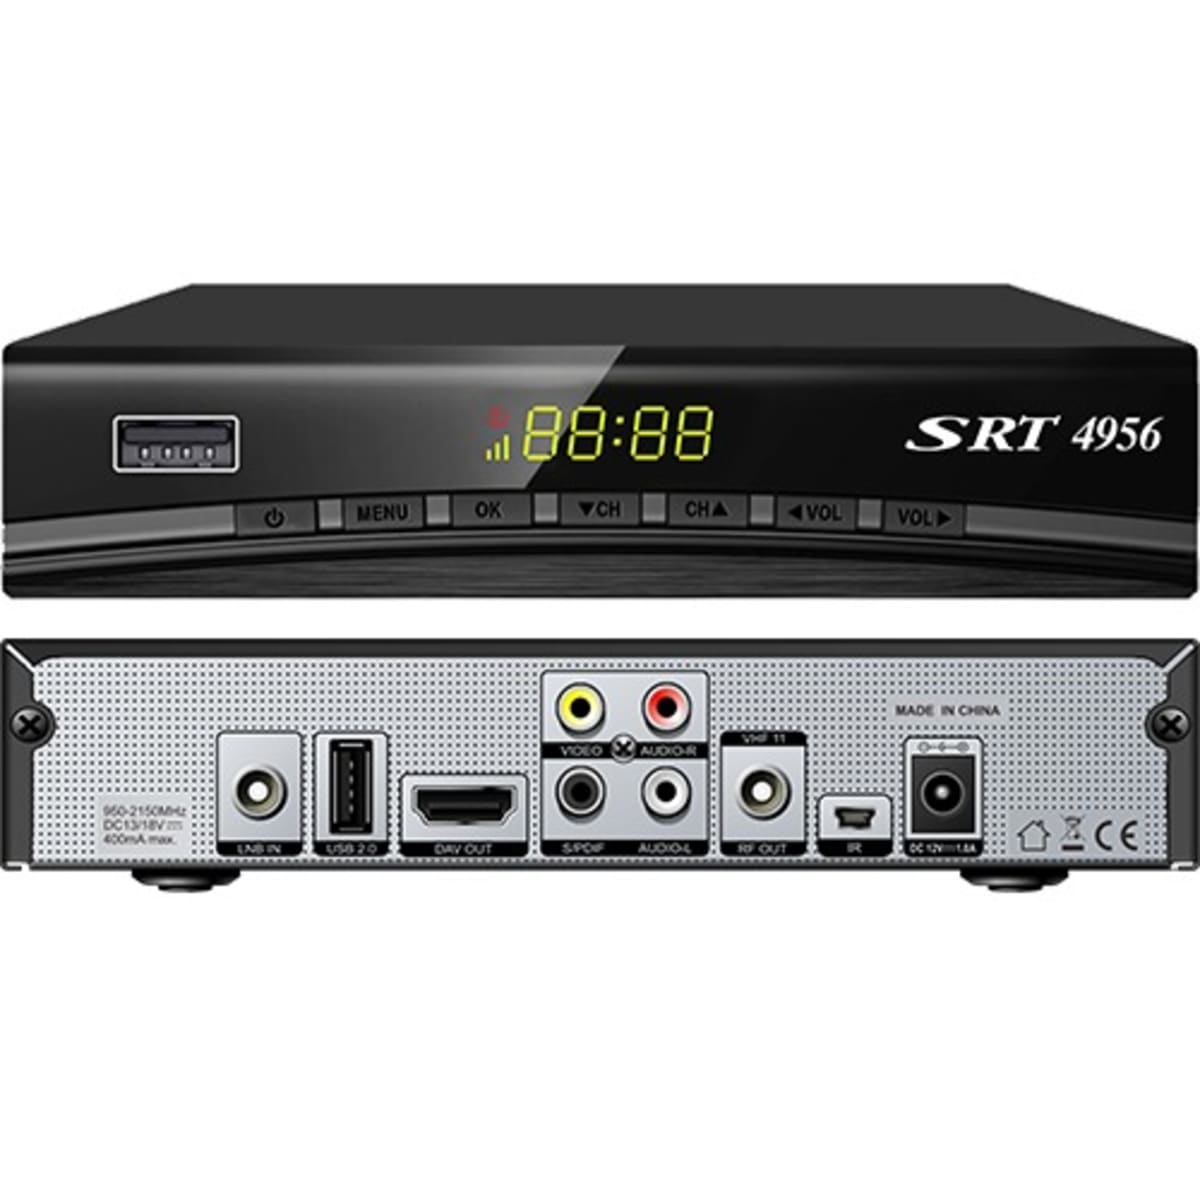 STRONG Digital HD Satellite TV Receiver - Srt 4956 | Konga Online Shopping